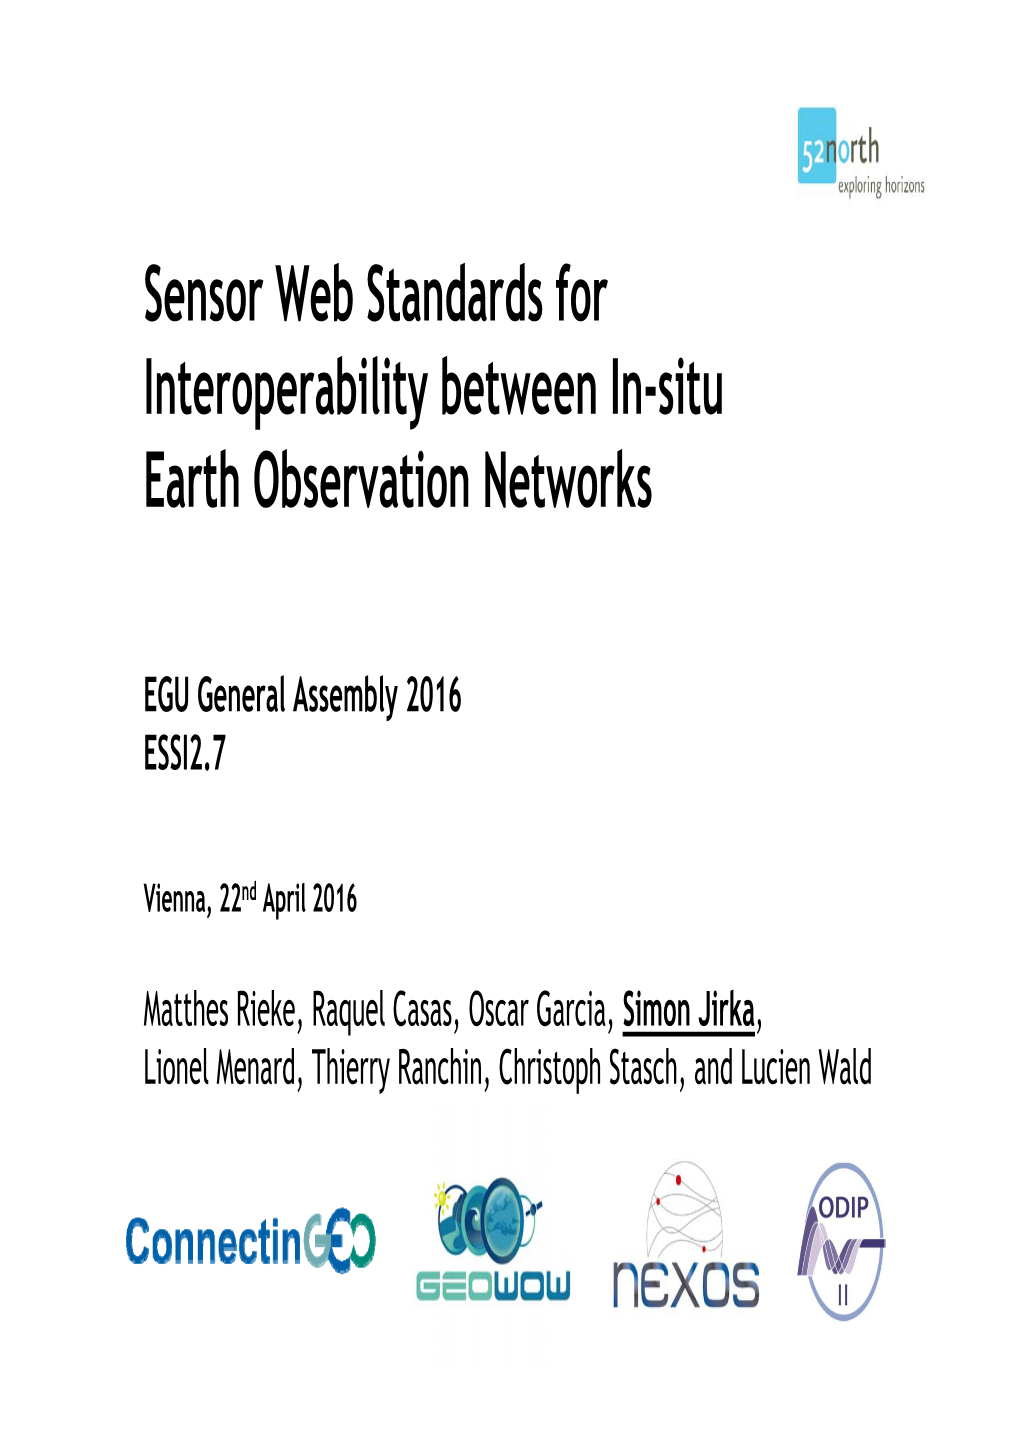 Sensor Web Standards for Interoperability Between In-Situ Earth Observation Networks